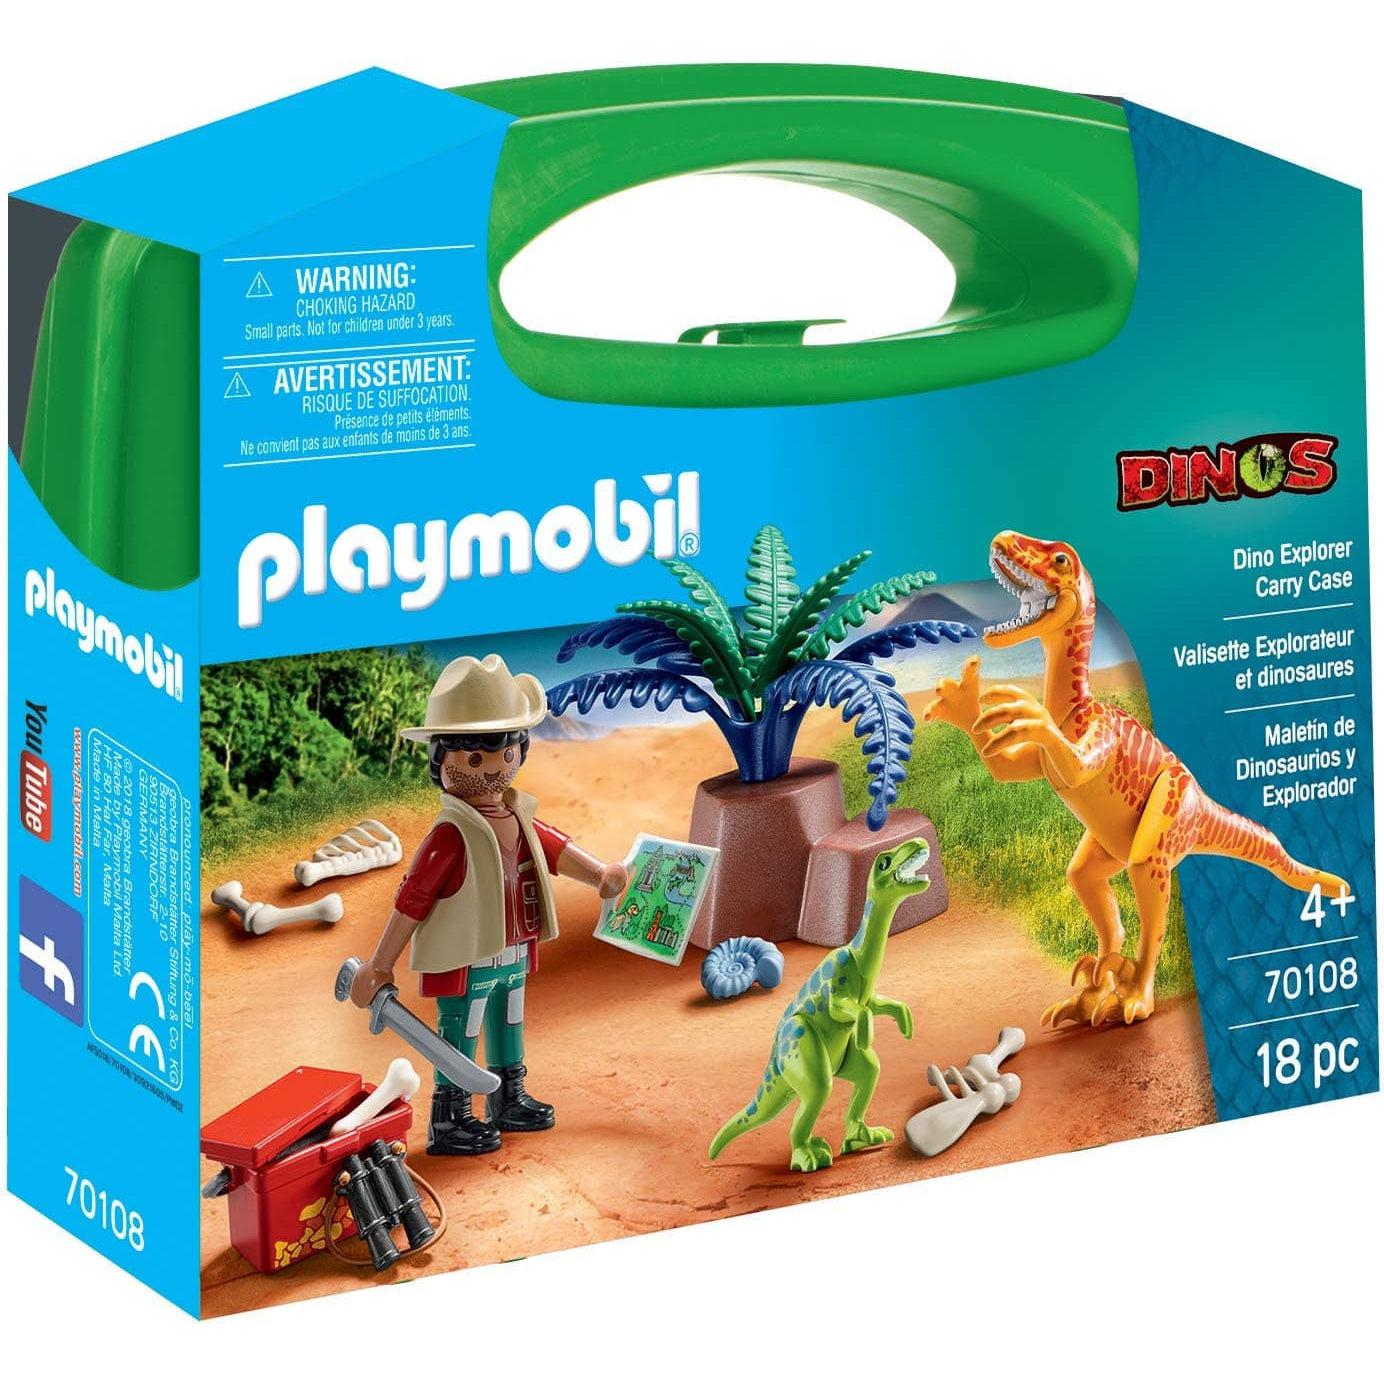 Playmobil-Dinos - Dino Explorer Carry Case-70108-Legacy Toys